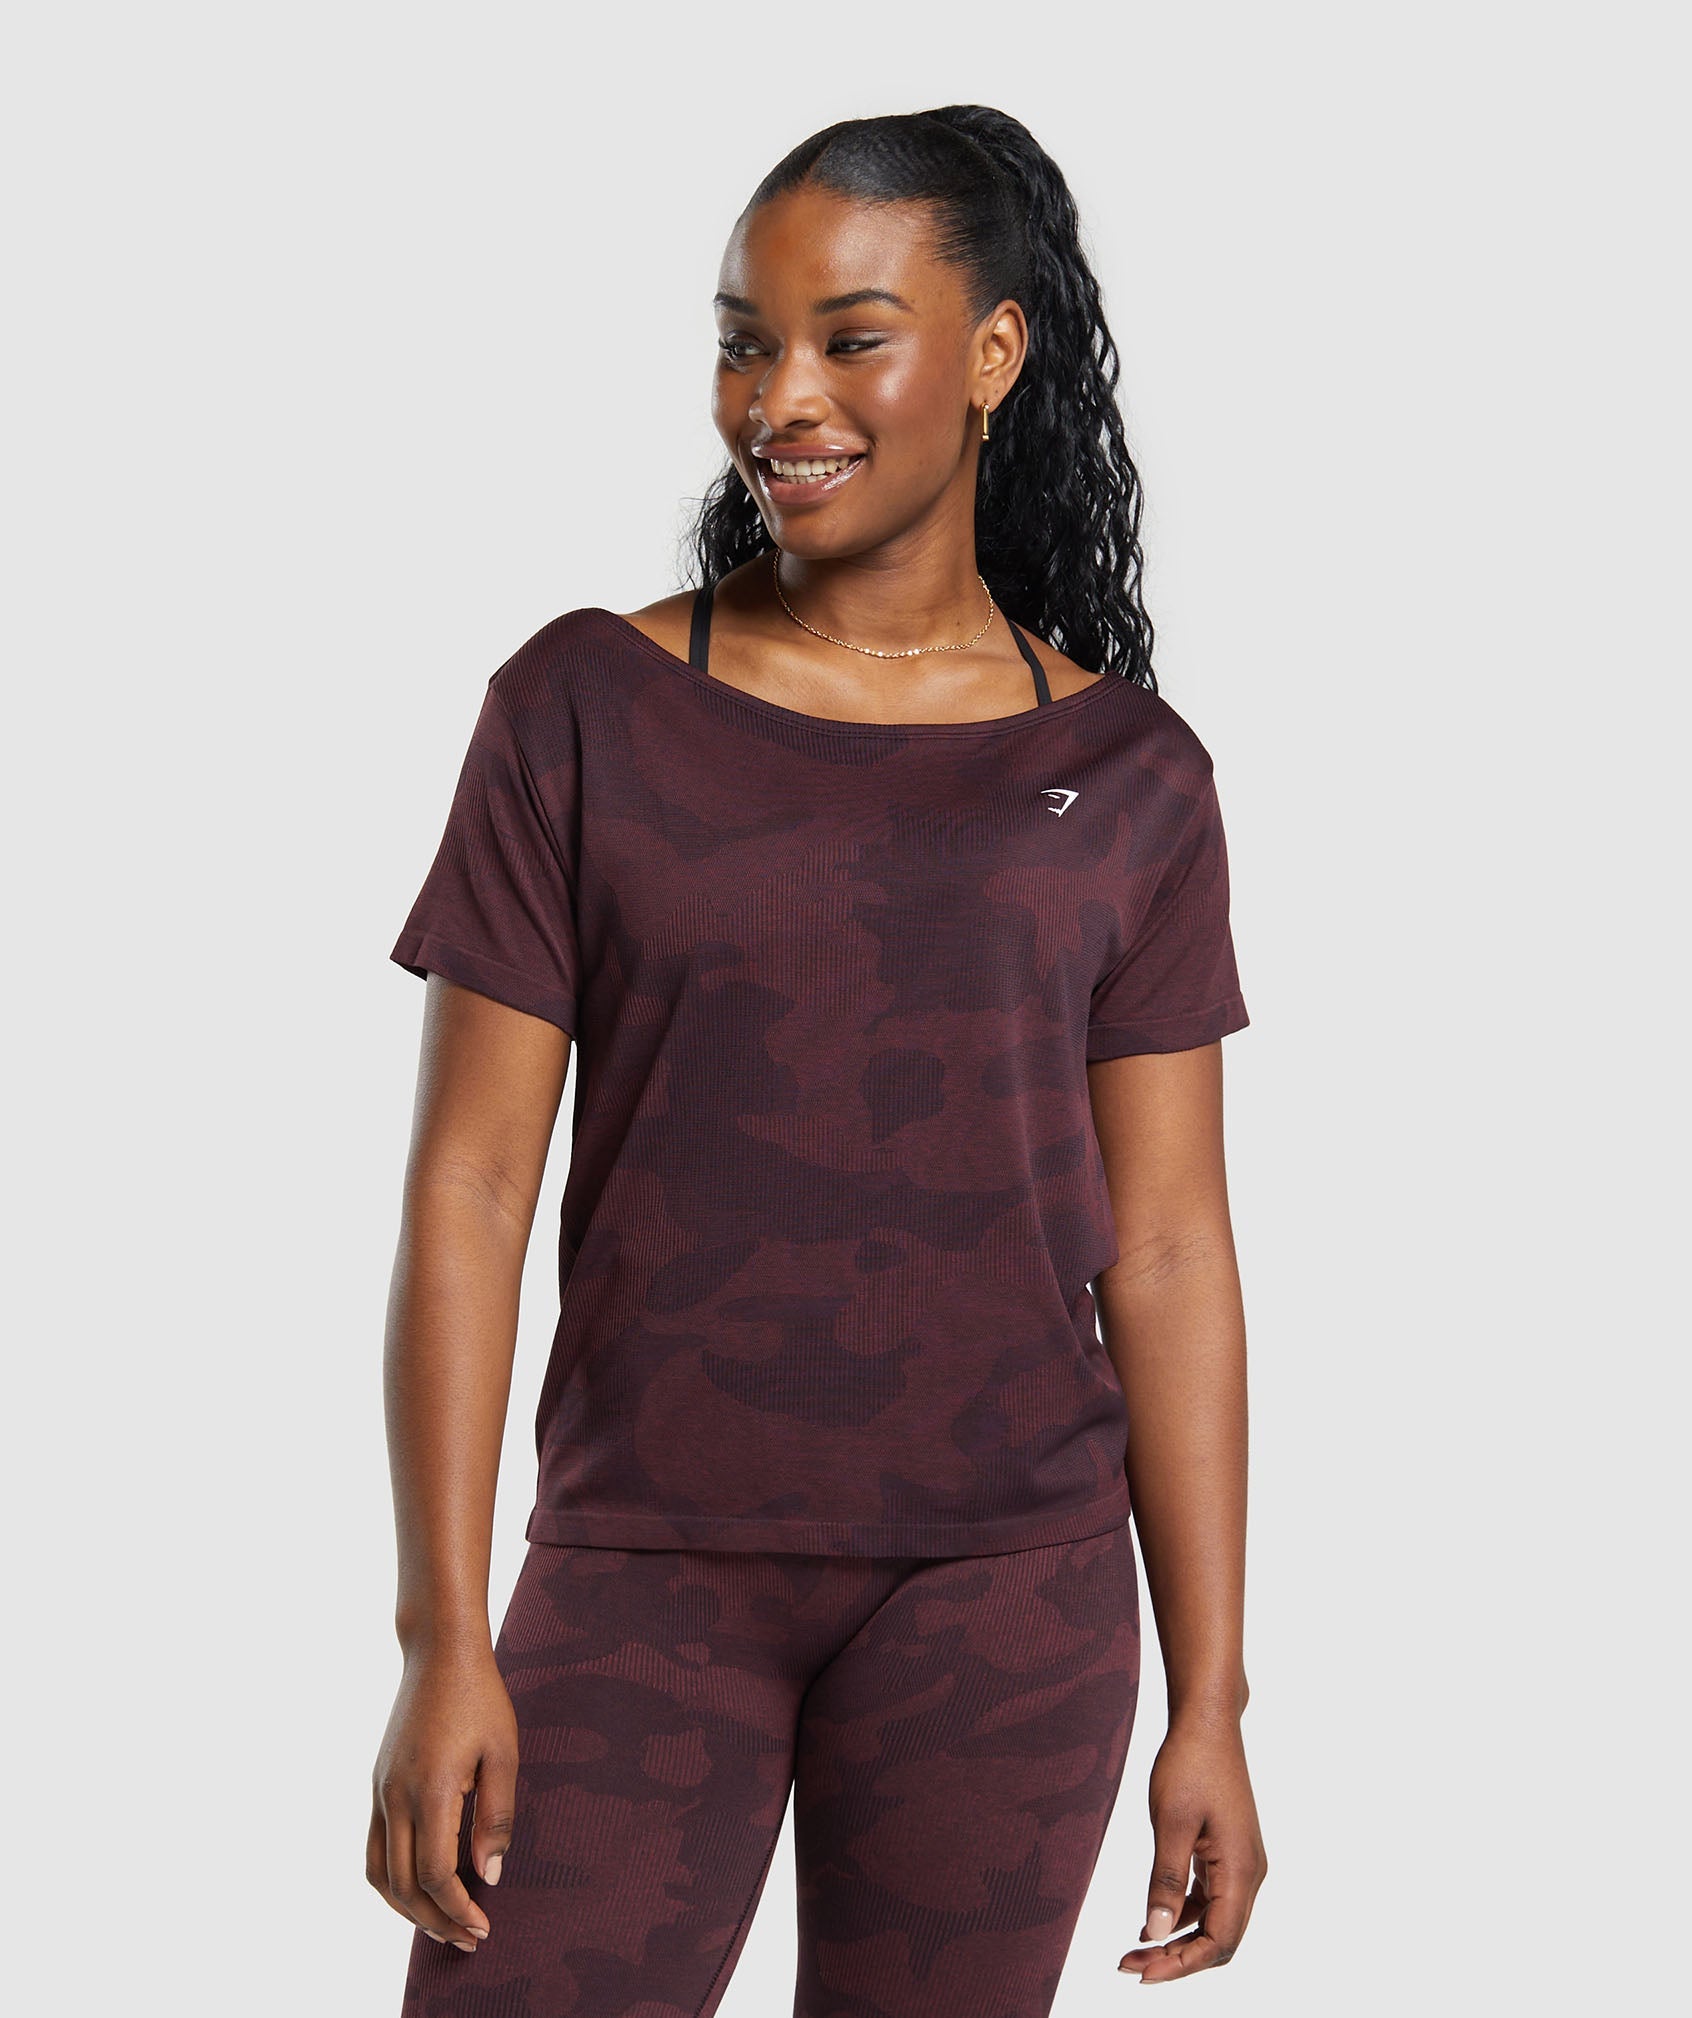 Adapt Camo Seamless T-Shirt in Plum Brown/Burgundy Brown - view 1